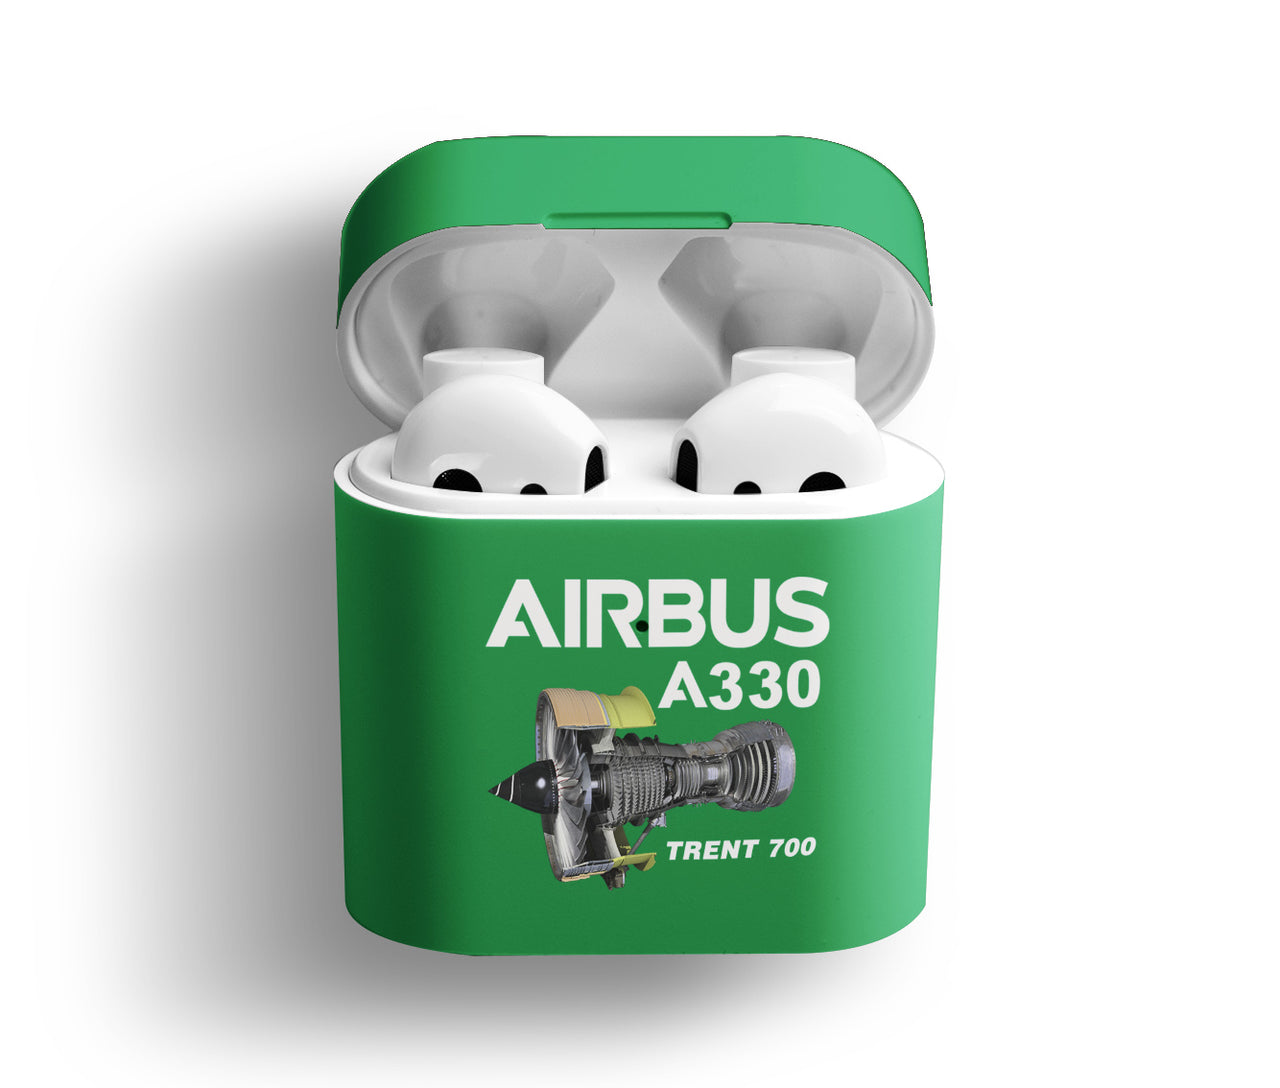 Airbus A330 & Trent 700 Engine Designed AirPods  Cases